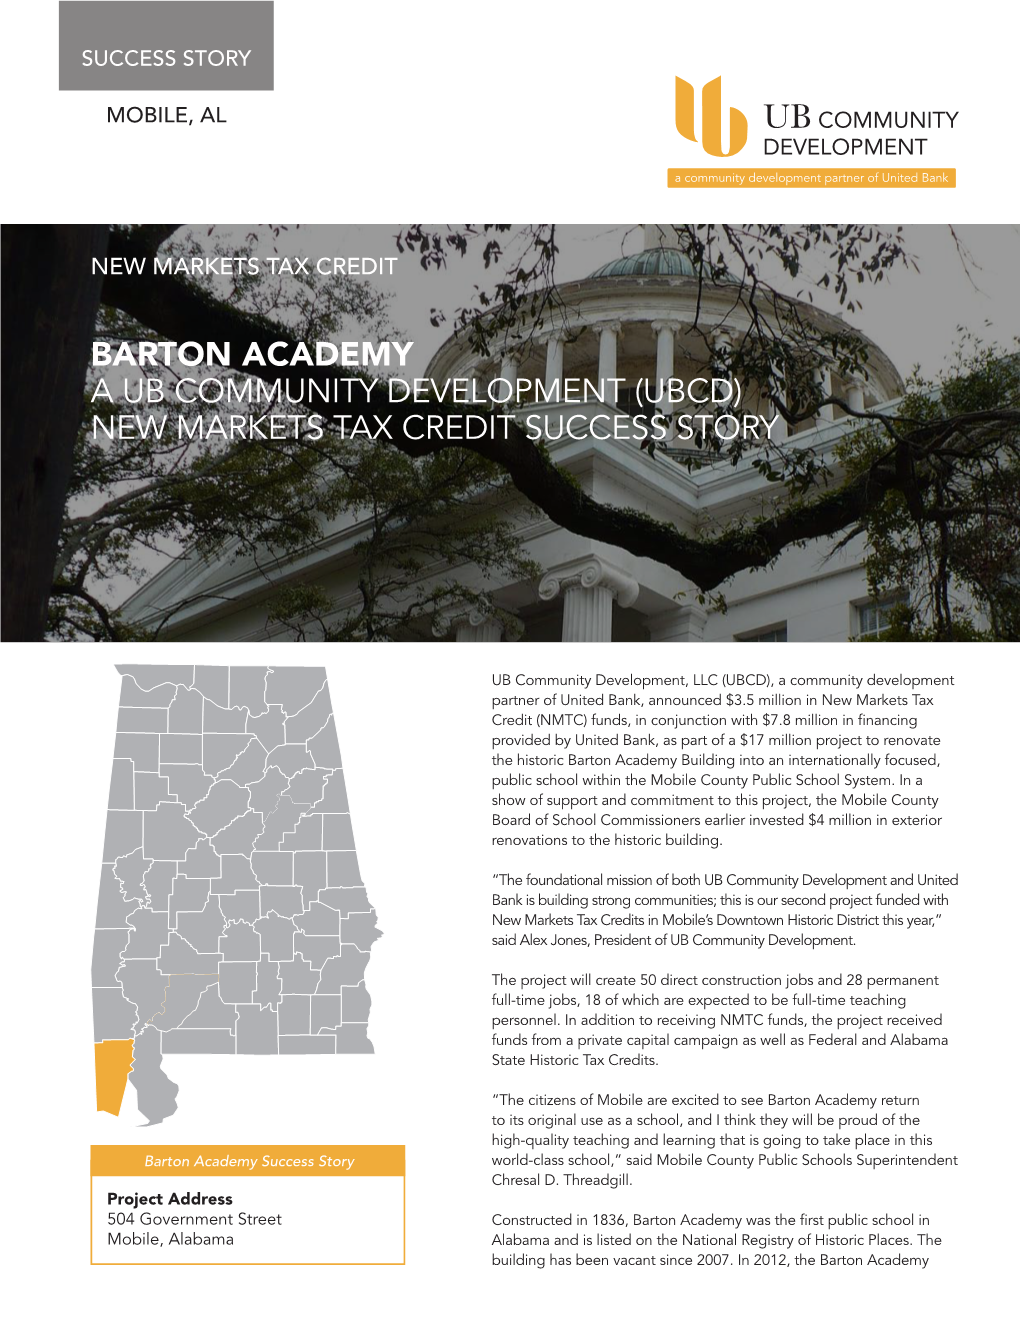 Barton Academy a Ub Community Development (Ubcd) New Markets Tax Credit Success Story